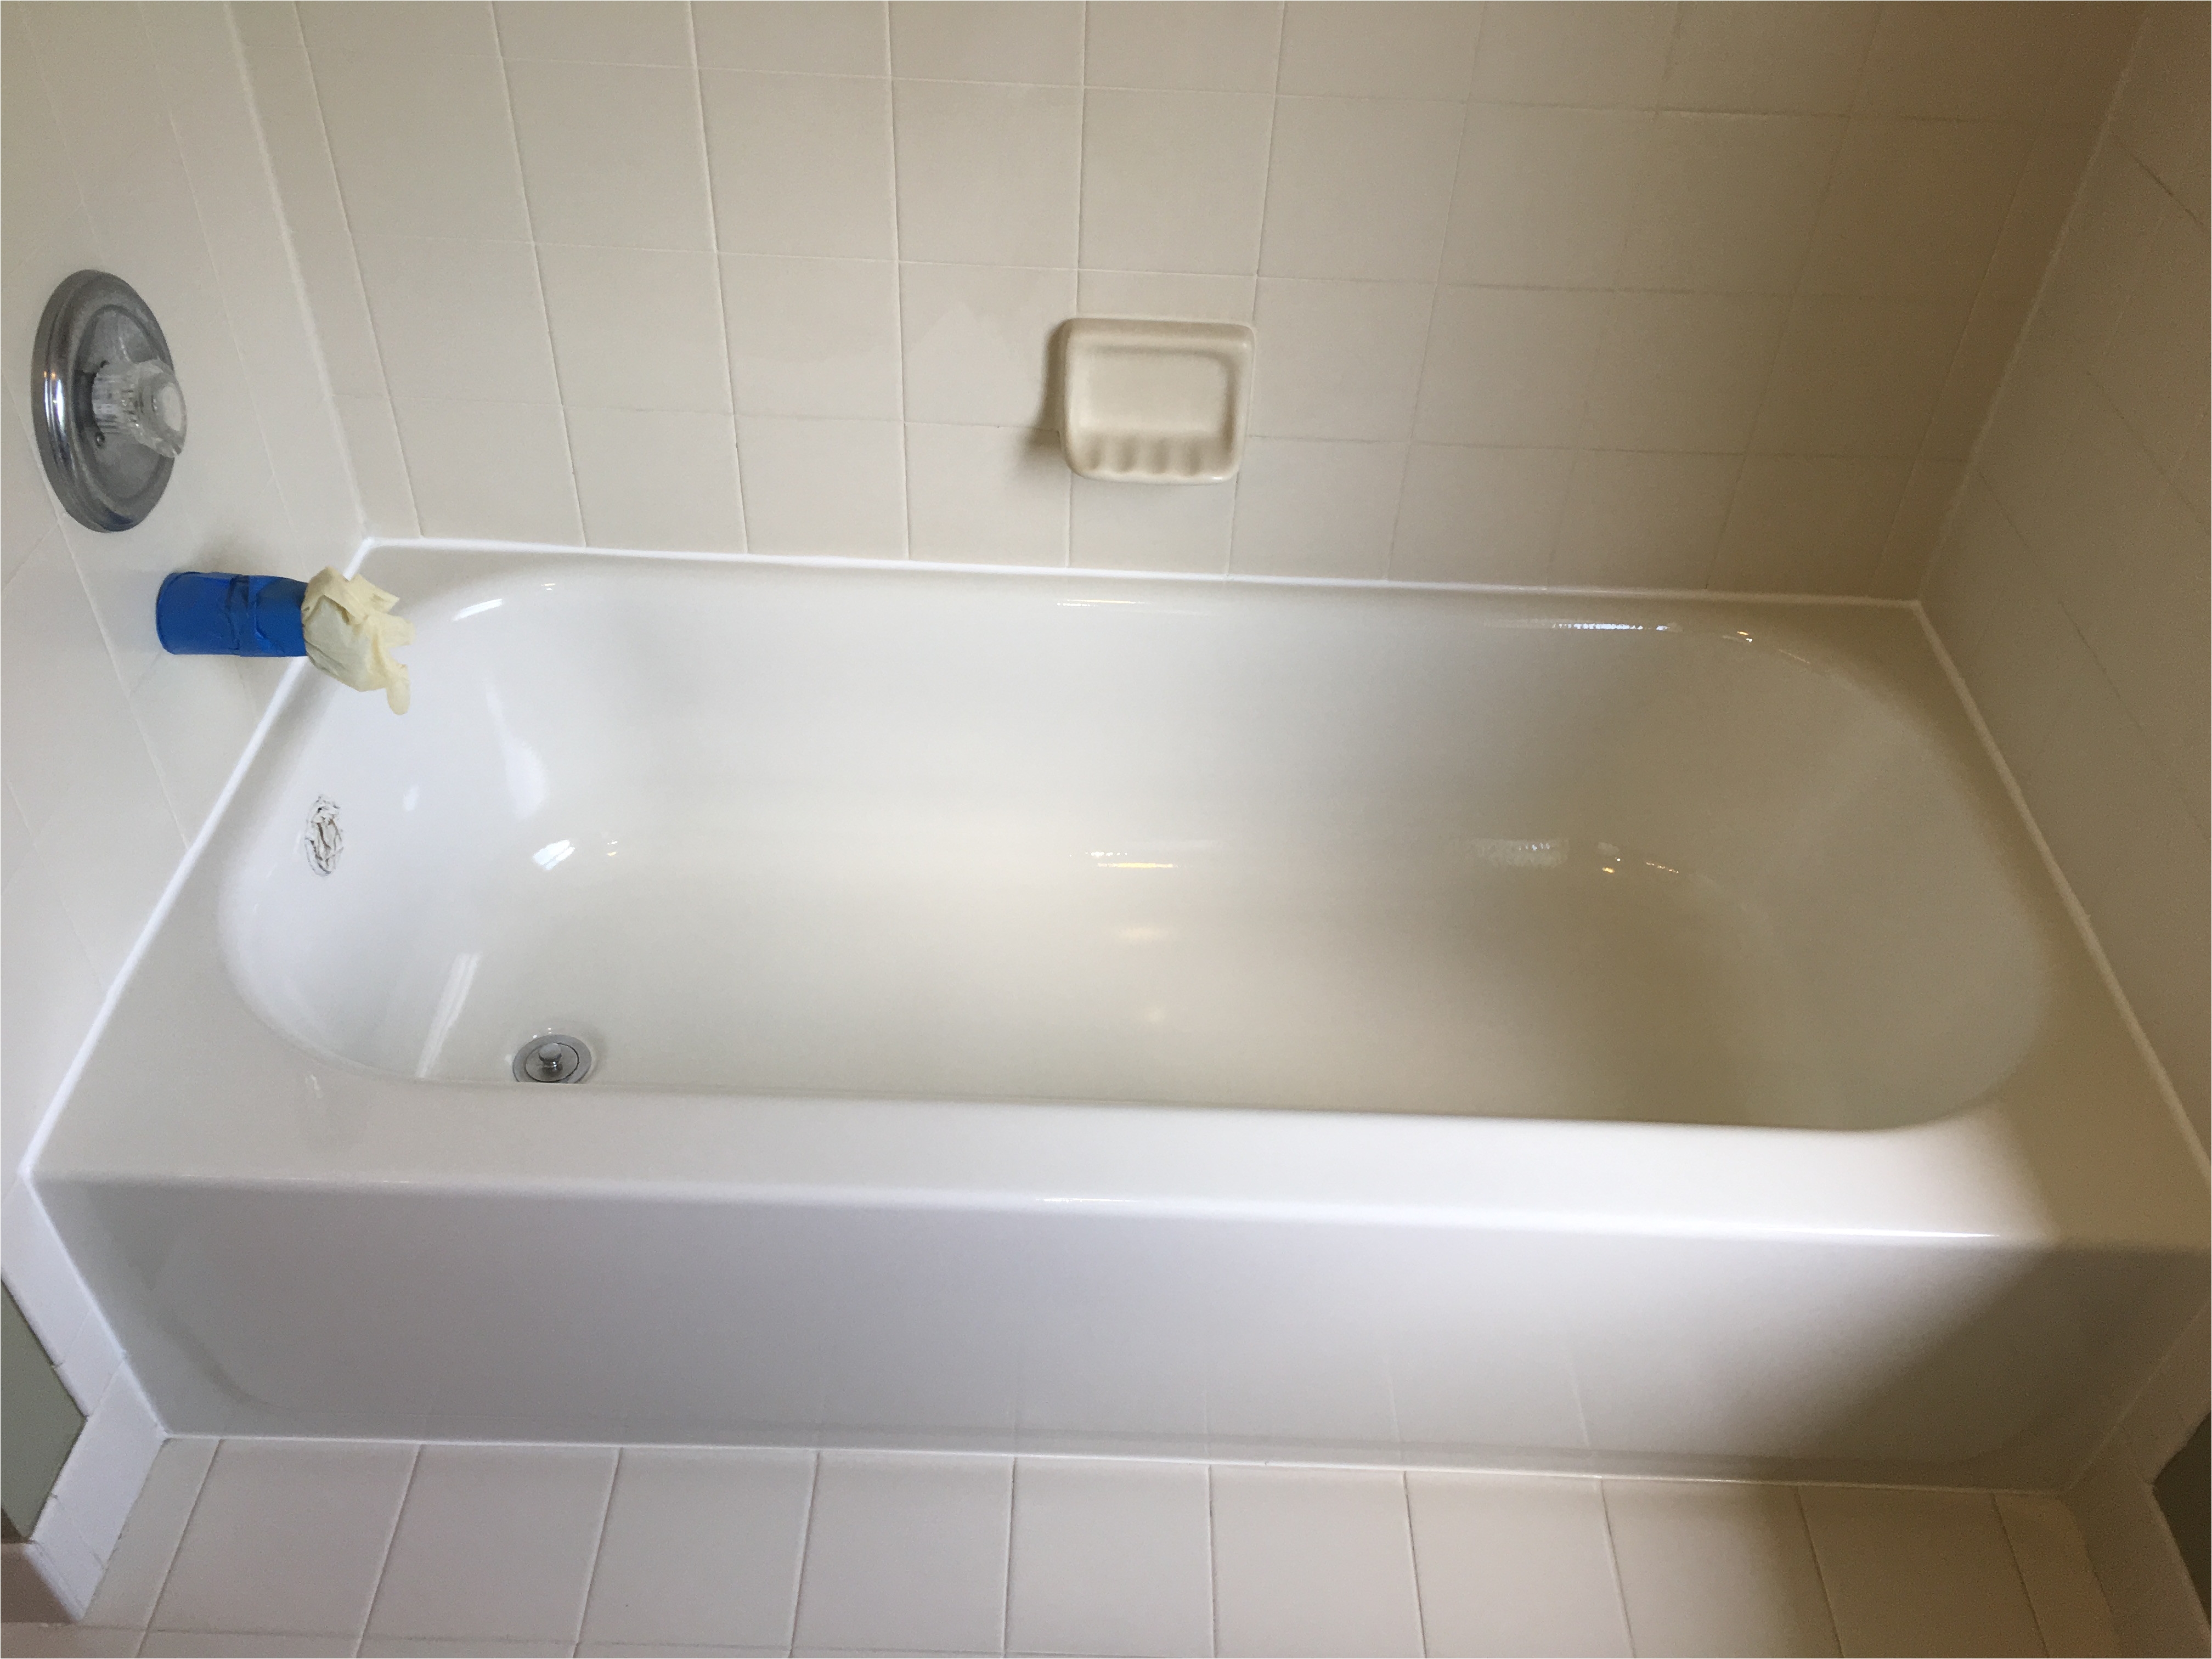 How Much Does It Cost To Reglaze A Bathtub Reglaze Bathtub